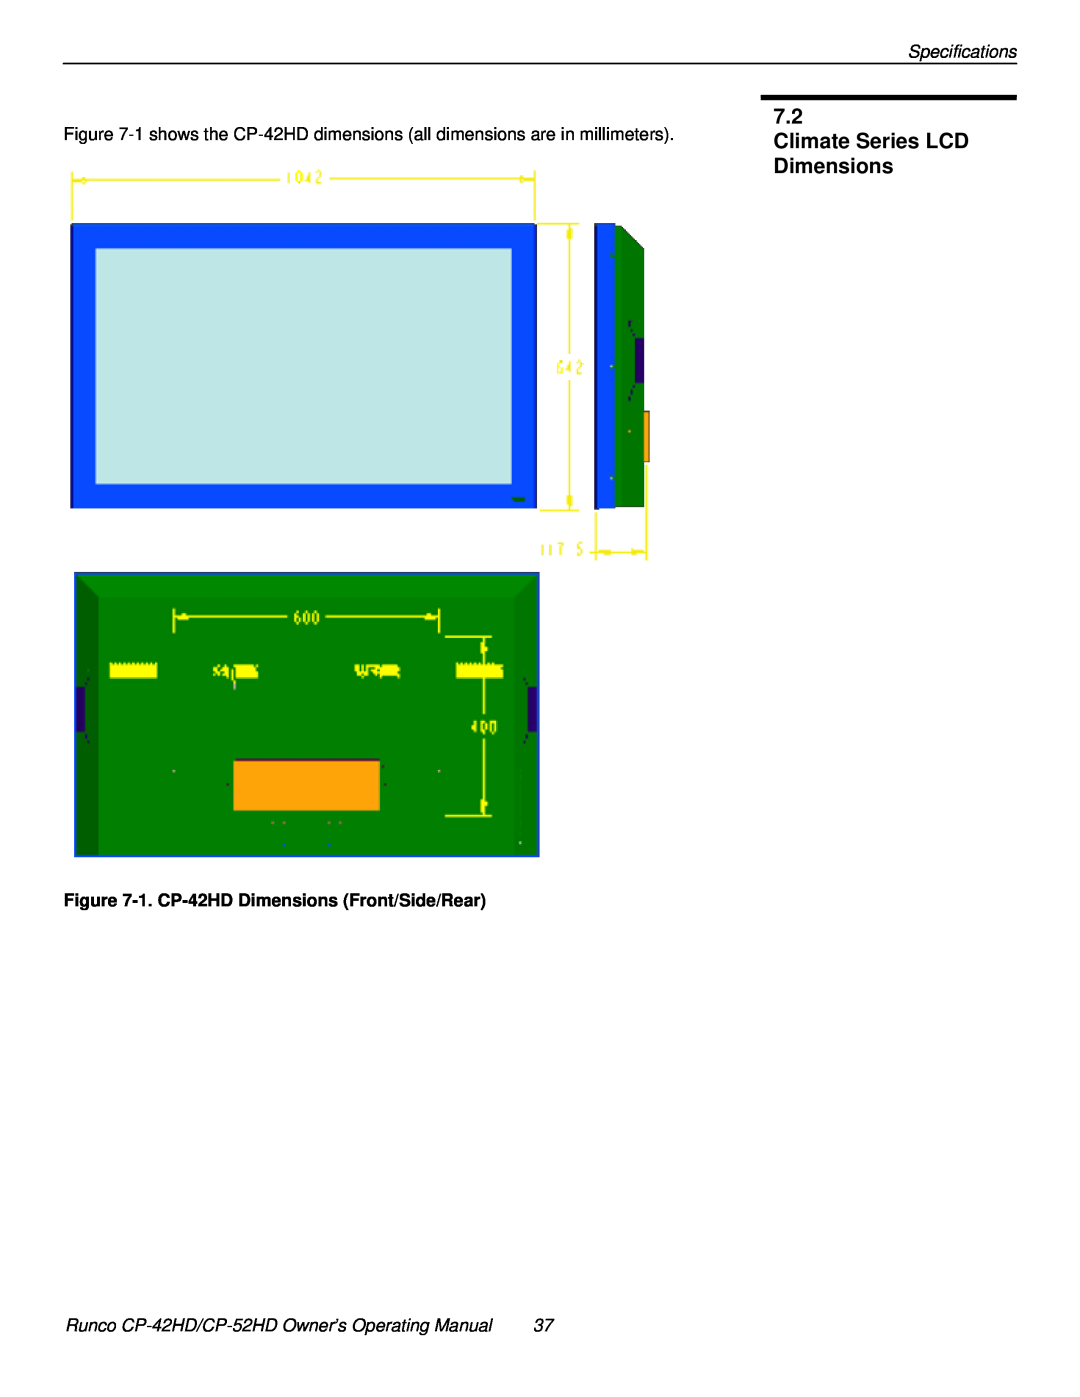 Runco CP-52HD manual 1. CP-42HD Dimensions Front/Side/Rear 